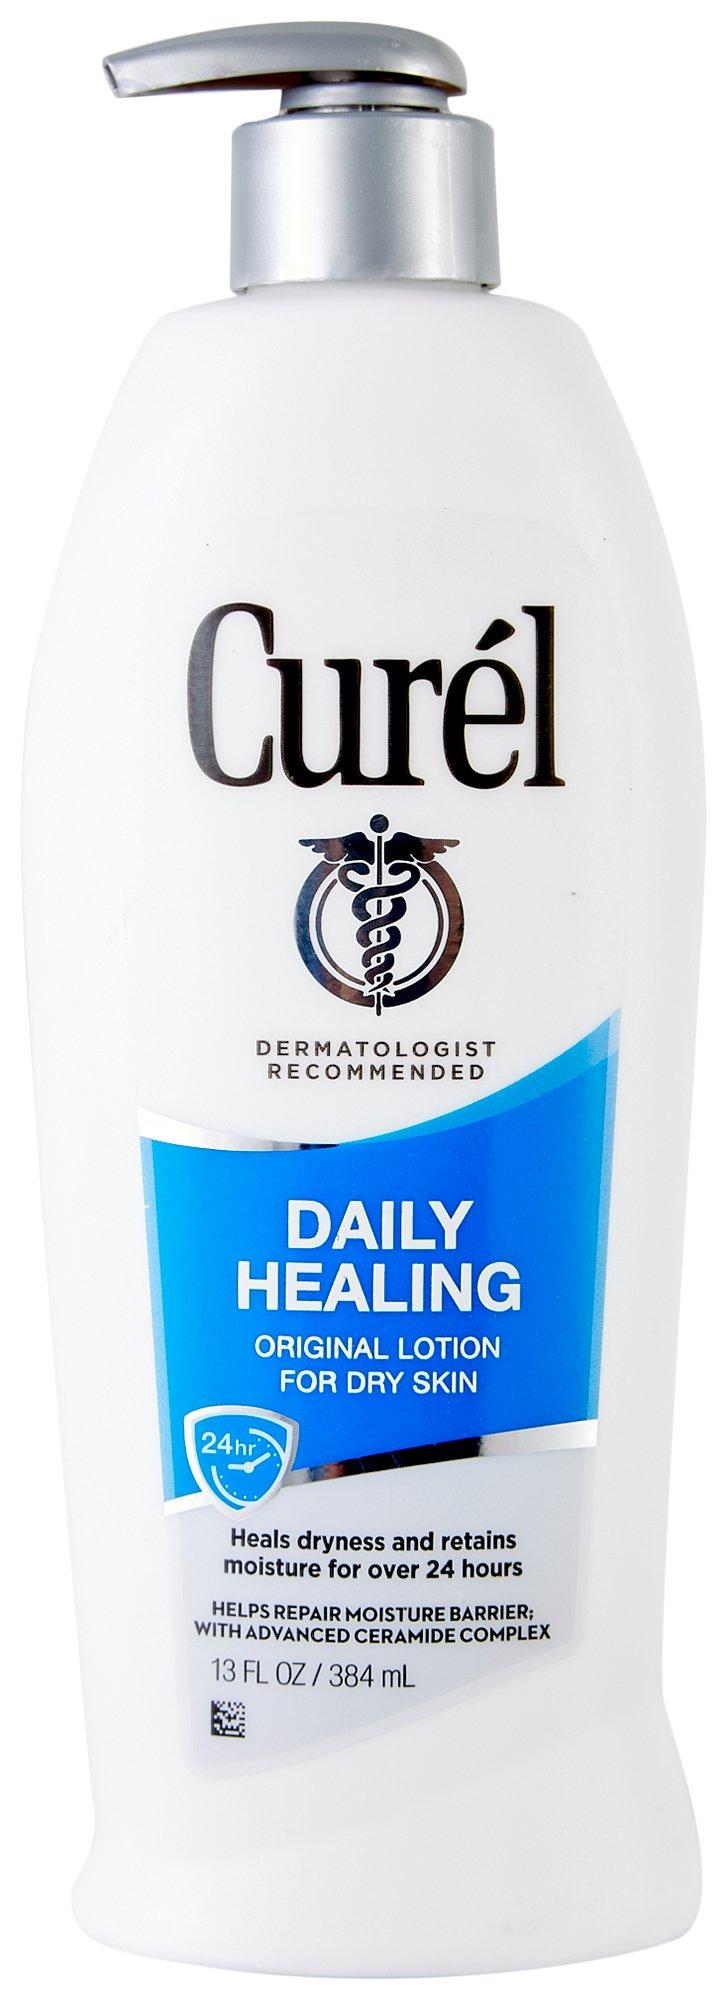 13 oz Daily Healing Original Lotion For Dry Skin